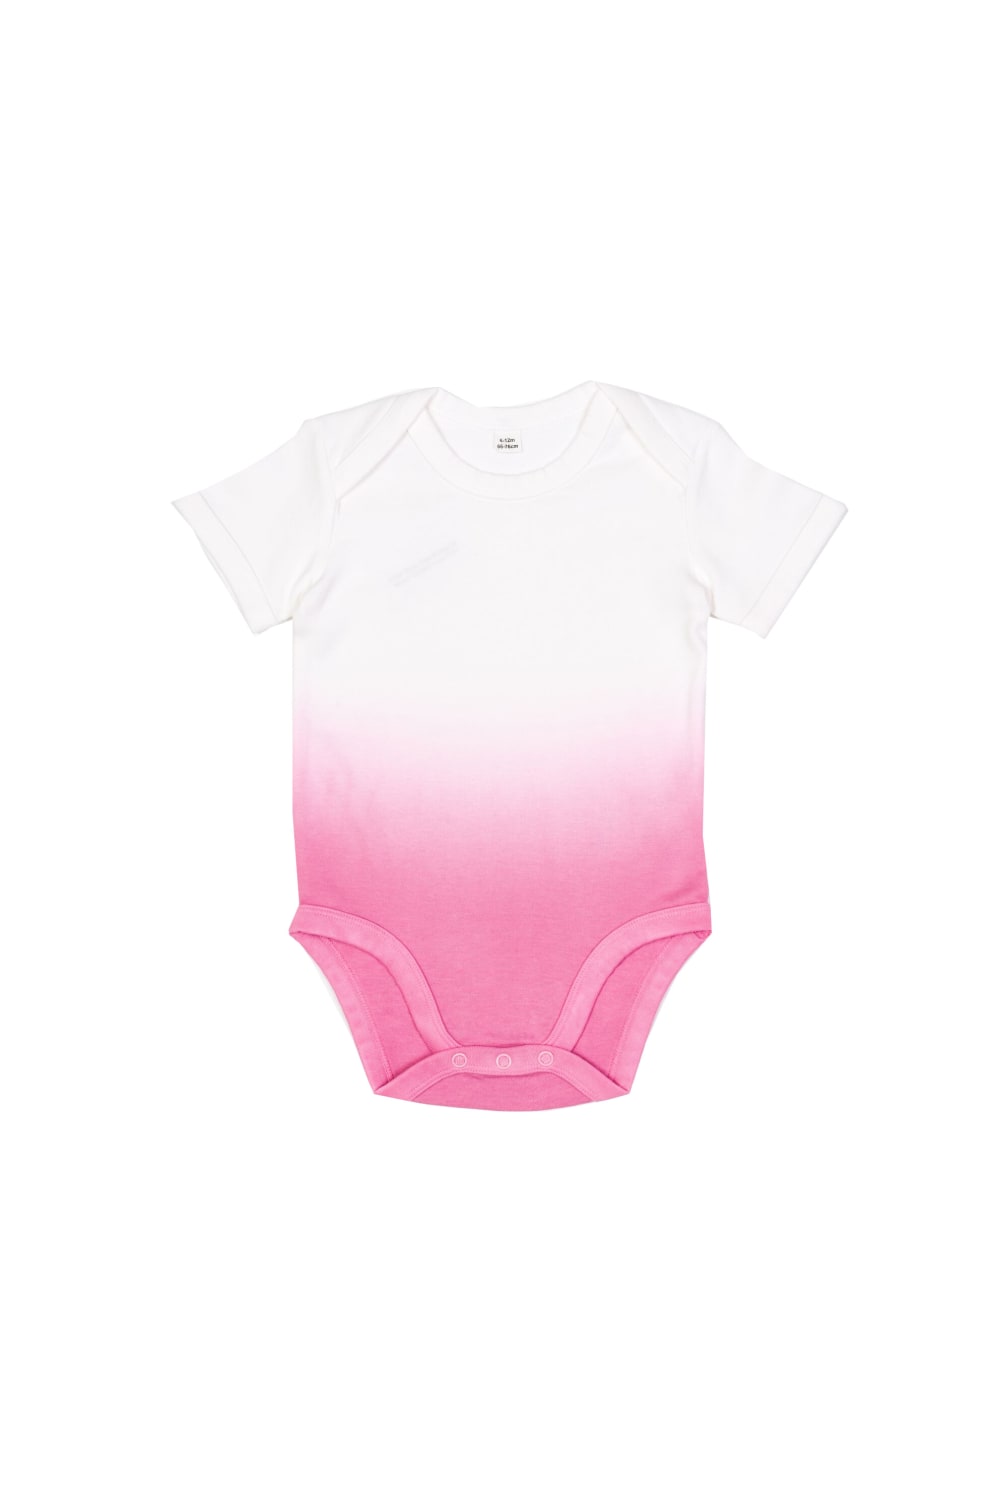 Babybugz Unisex Baby Dips Bodysuit (White/Bubblegum Pink)